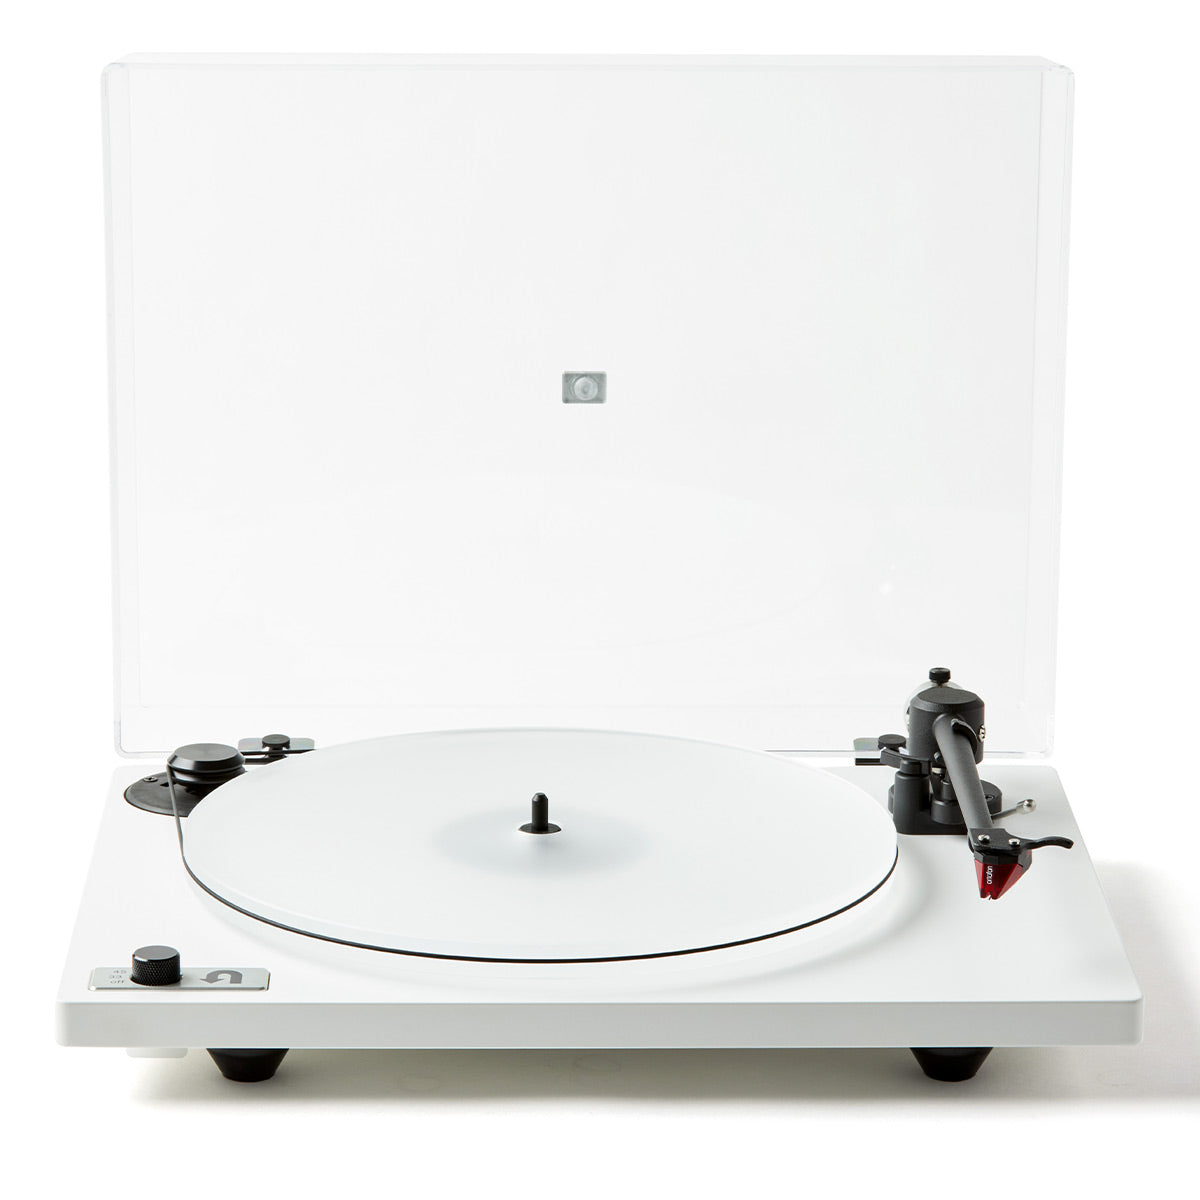 Gloss White Acrylic Turntable Platter Mat. Fits REGA, PRO-JECT